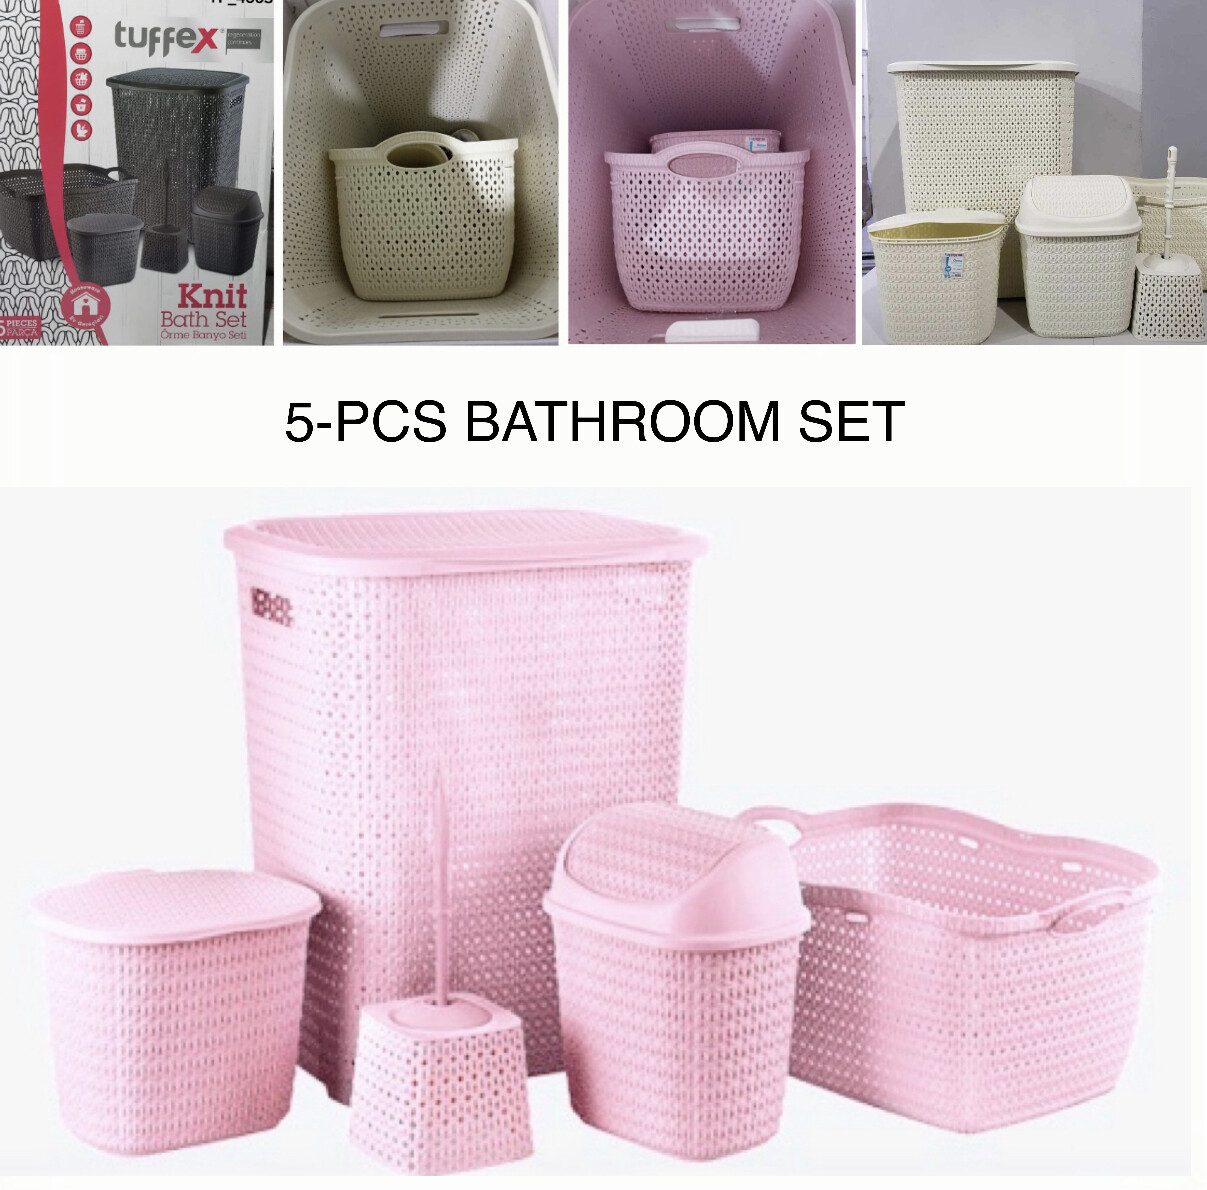 5-Pc Bathroom Set*